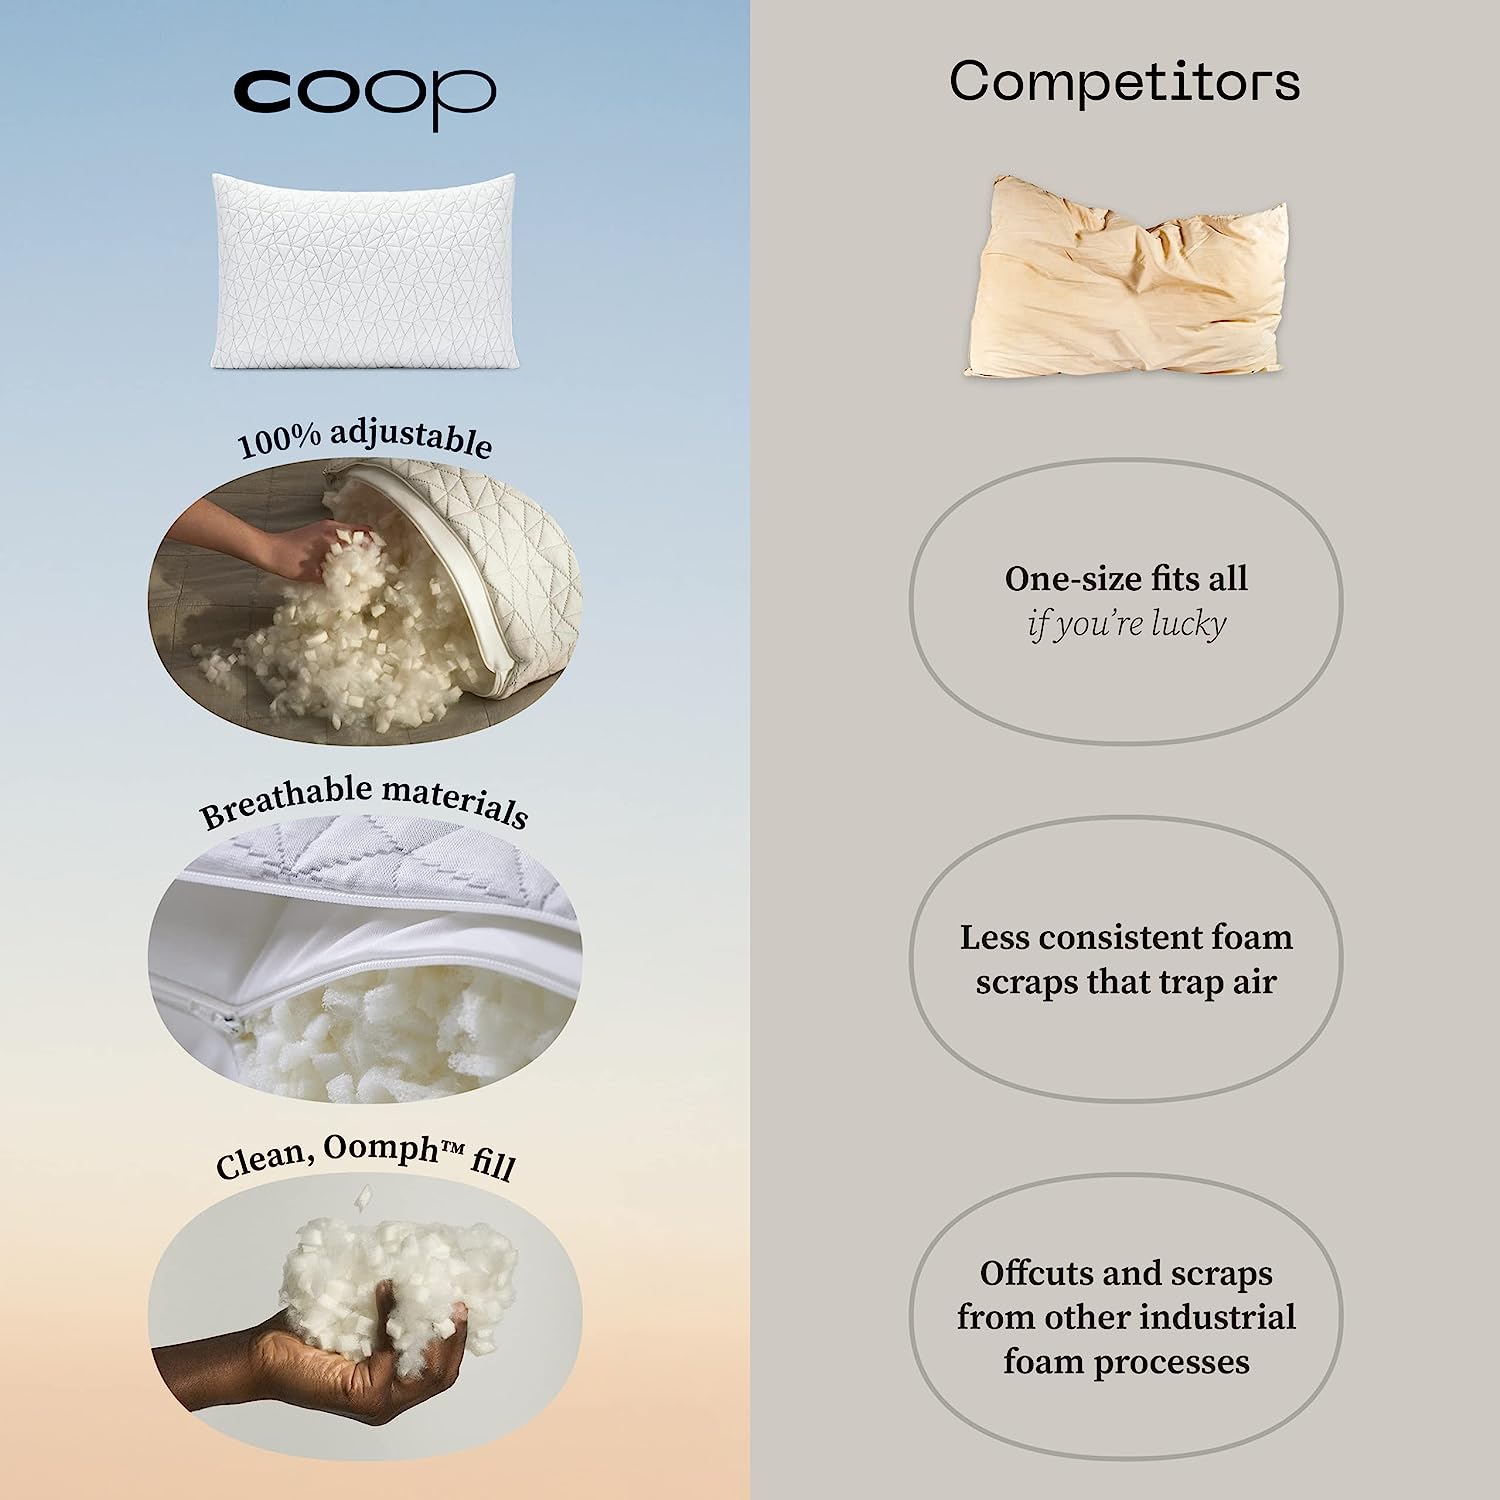  Coop Home Goods Original Loft, Queen Size Bed Pillows for  Sleeping - Adjustable Cross Cut Memory Foam Pillows - Medium Firm for Back,  Stomach and Side Sleeper - CertiPUR-US/GREENGUARD Gold 